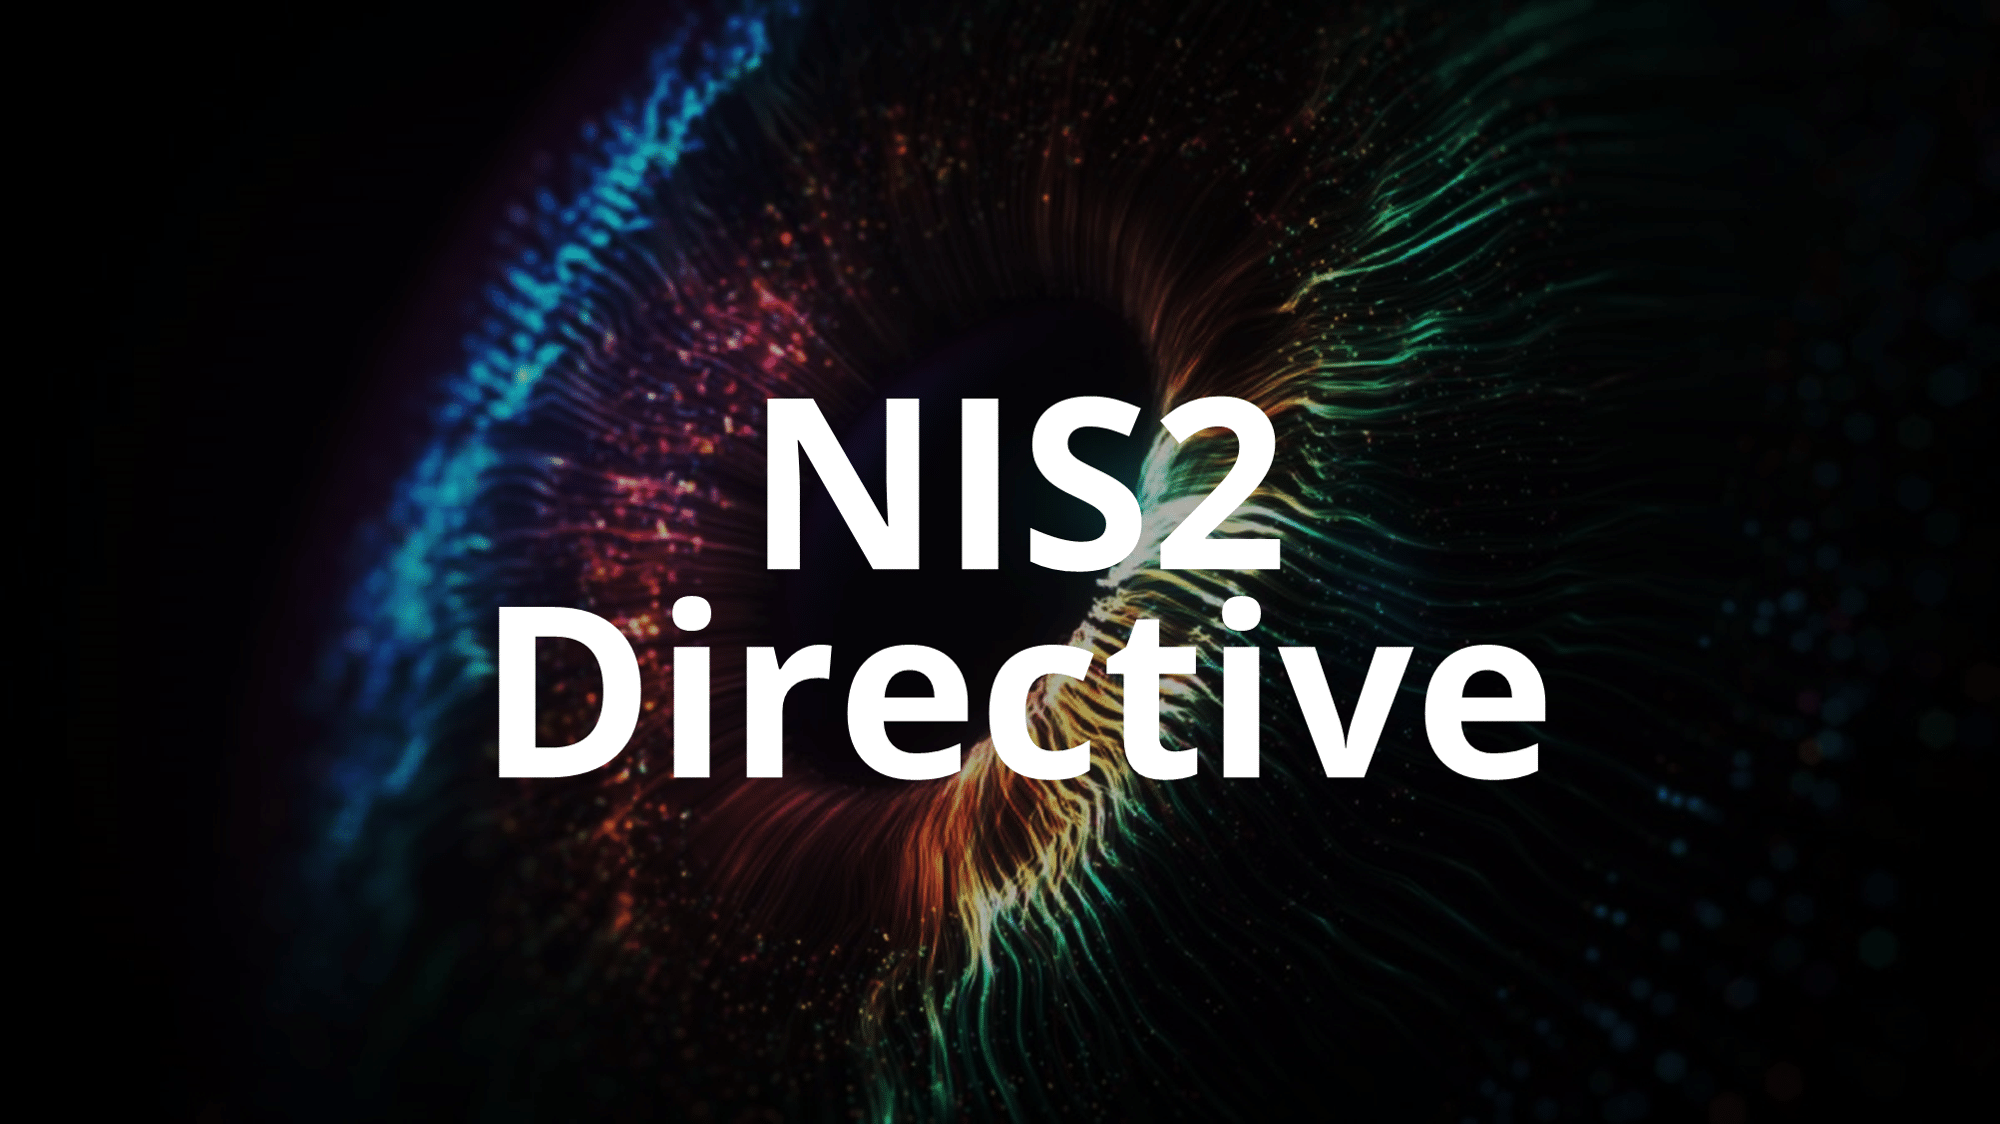 NIS2 Directive